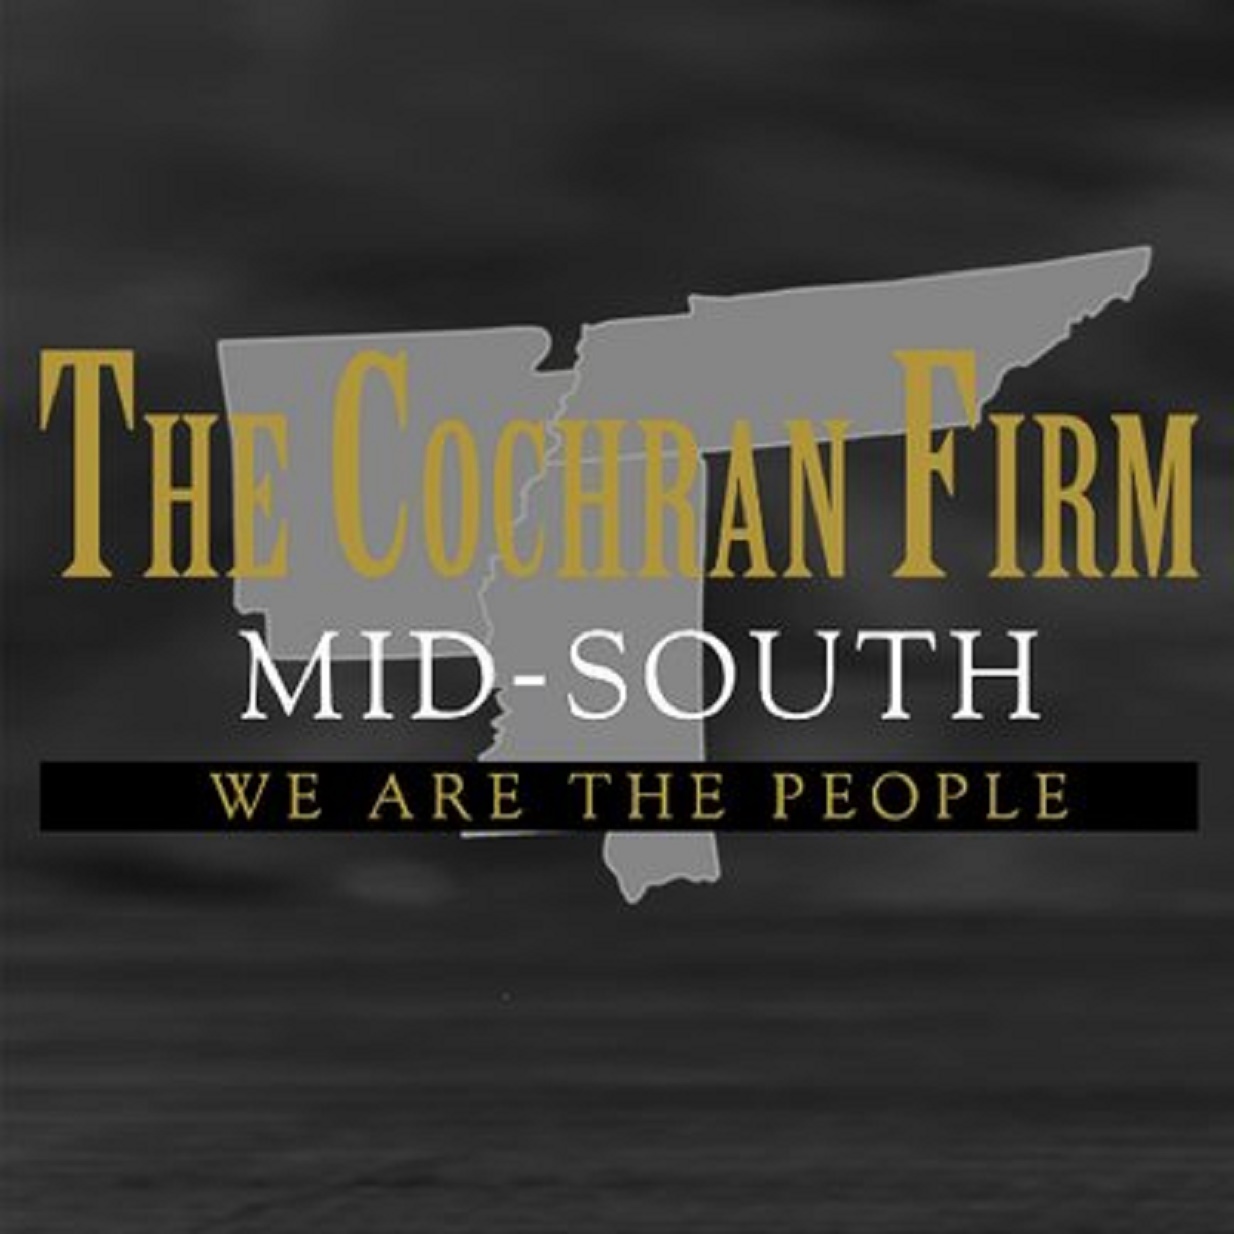  The Cochran Firm Memphis